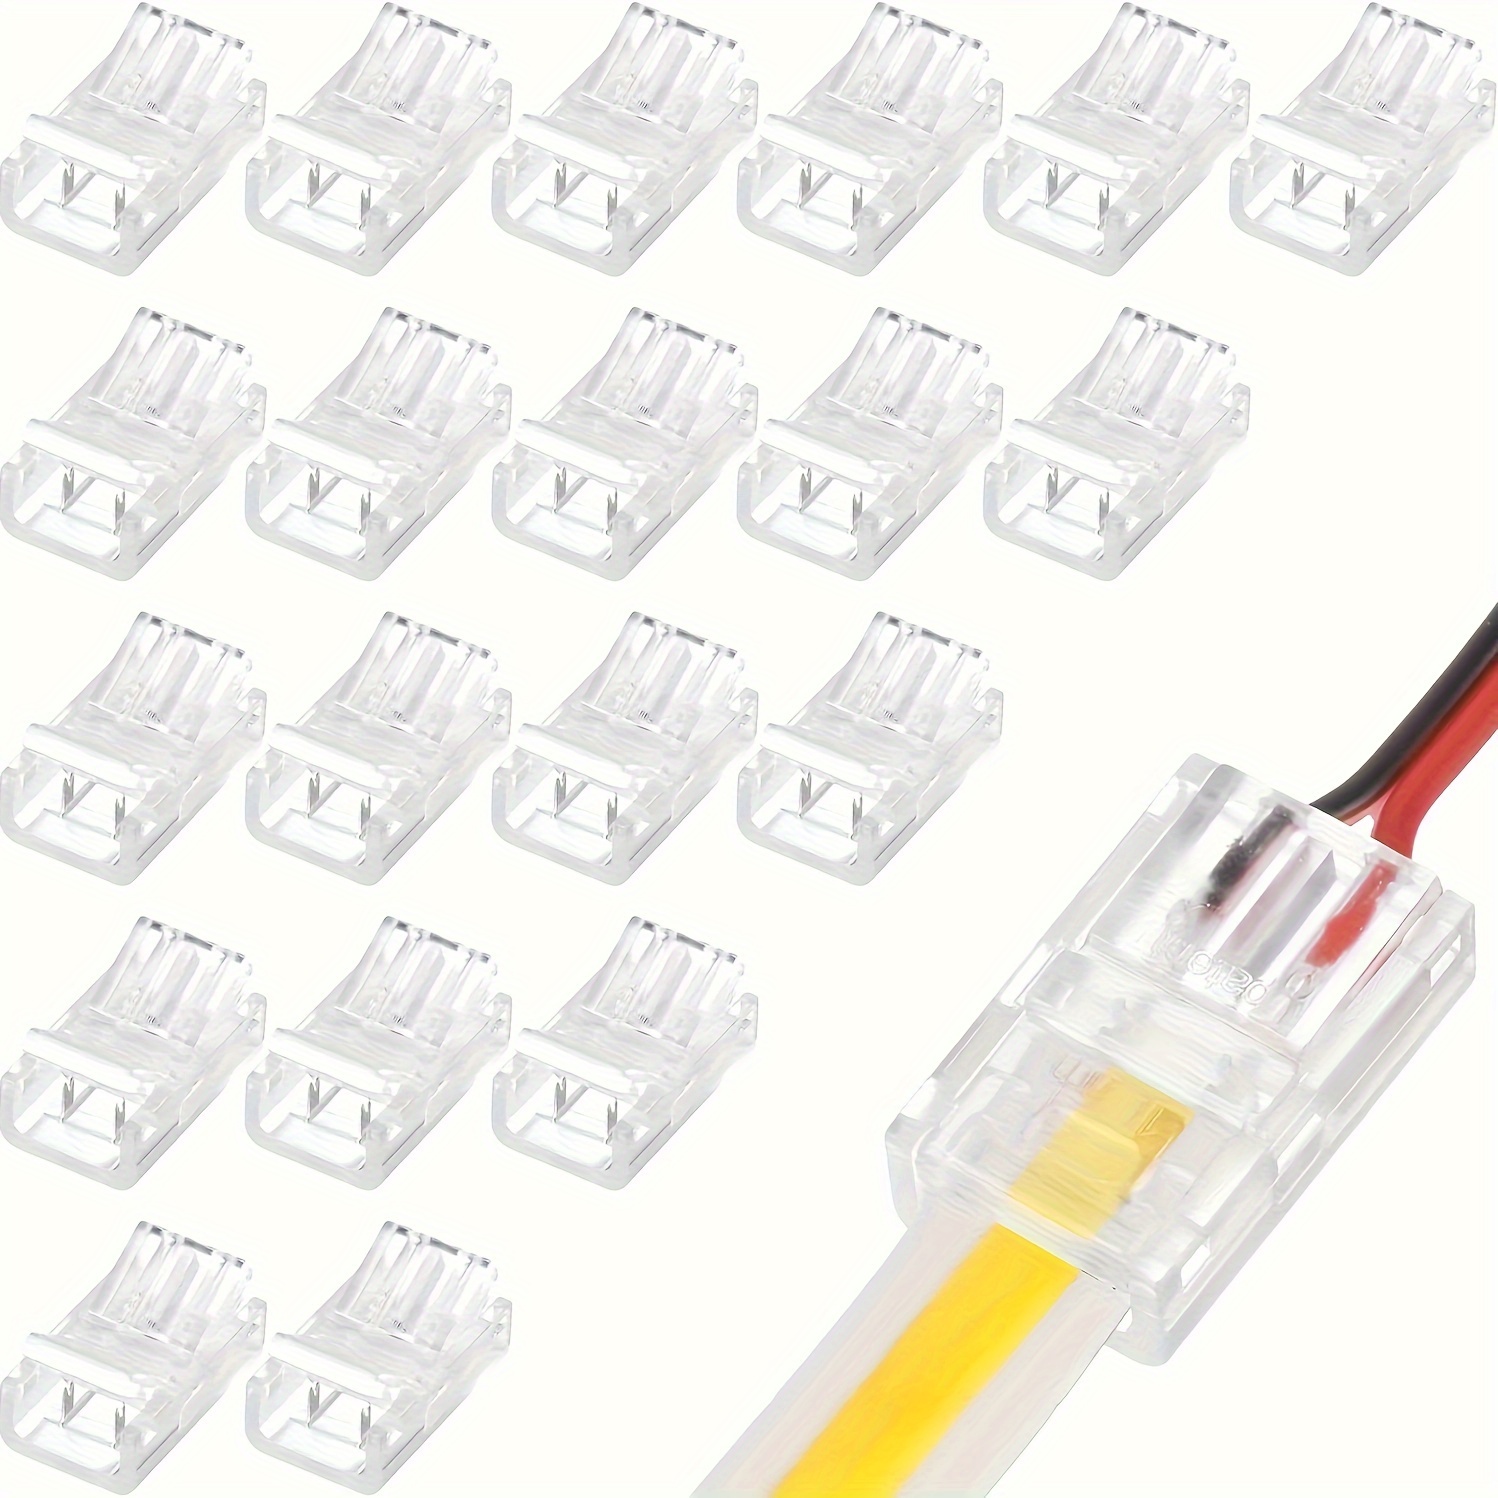  20 conectores de tira LED – Conectores de luz LED, conectores  LED de 4 pines de 0.394 in para tiras de luces, conectores de tira de luz  LED transparentes, conectores de